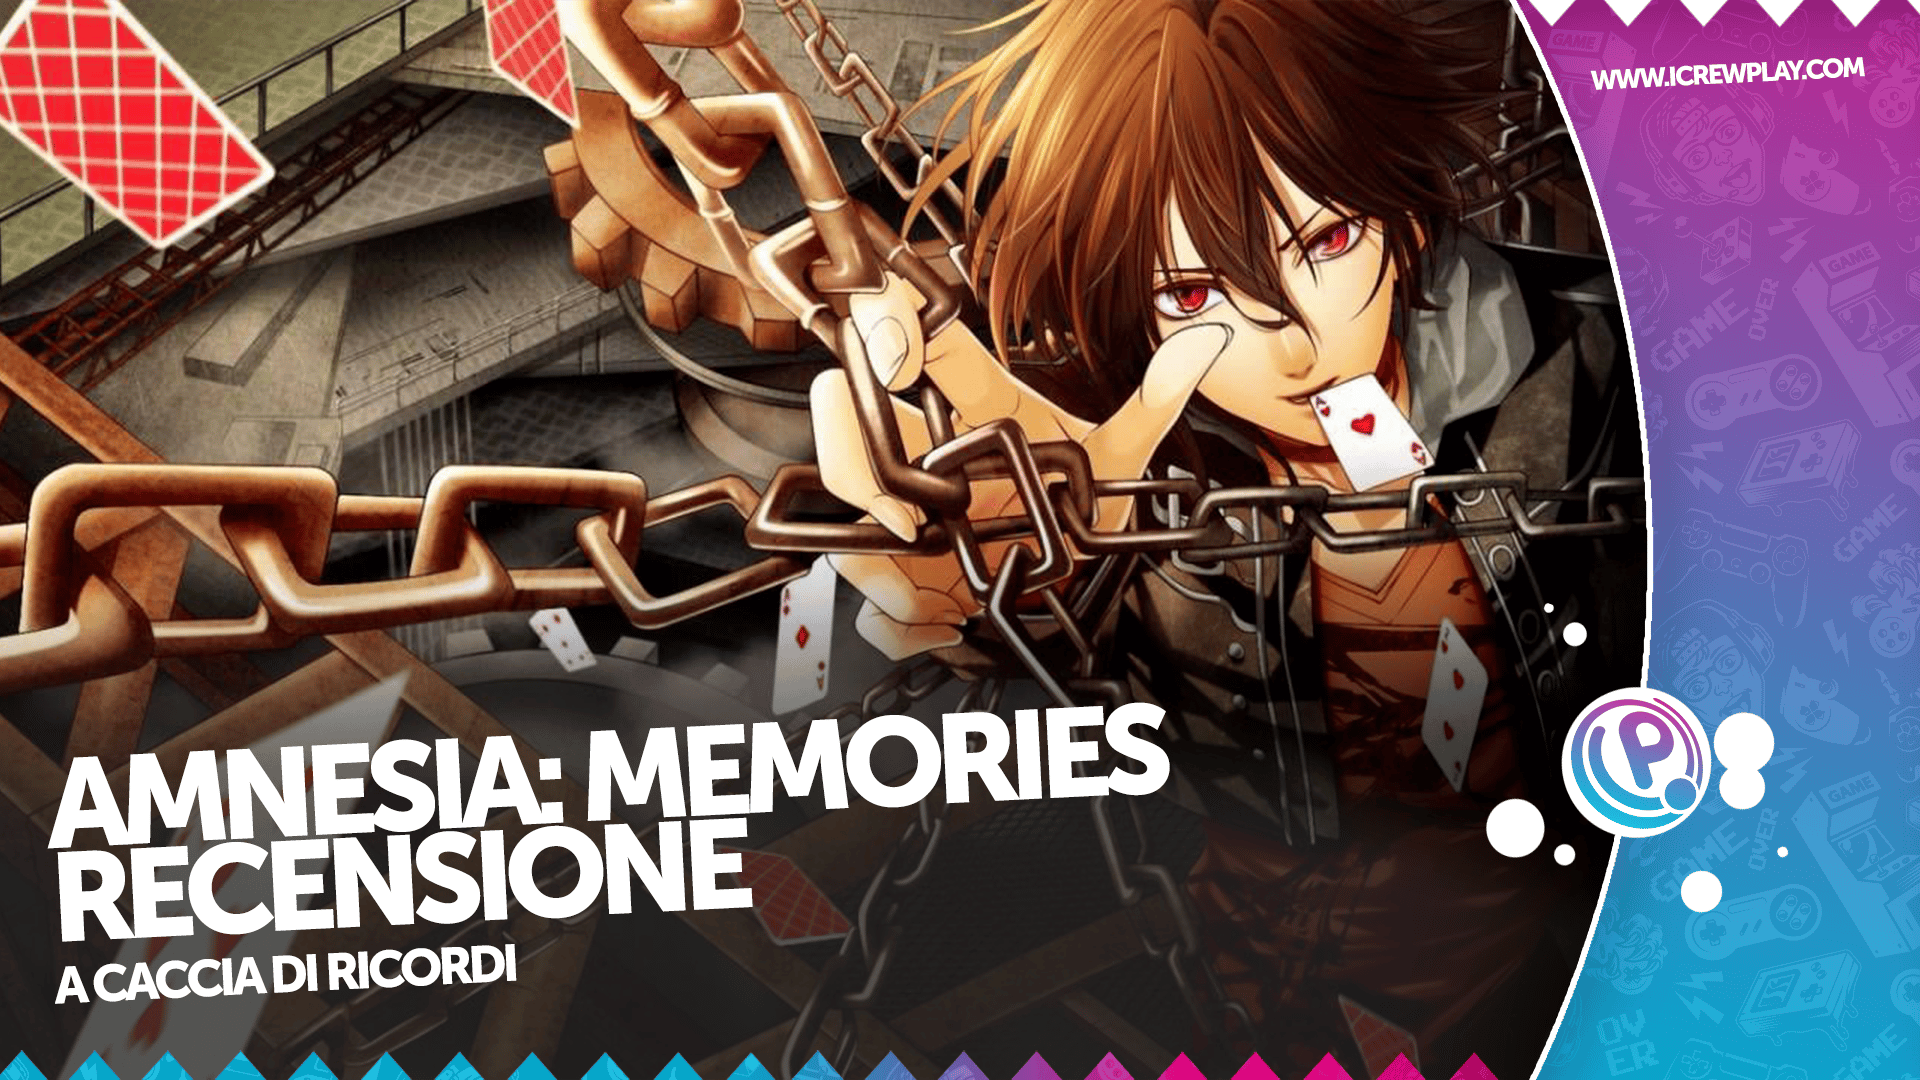 Amnesia: Memories recensione per Nintendo Switch 2